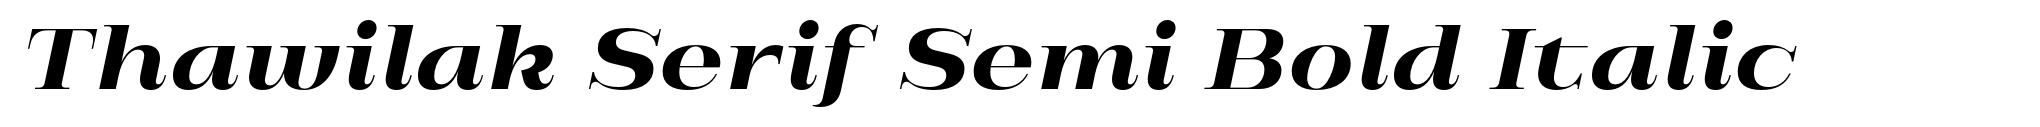 Thawilak Serif Semi Bold Italic image